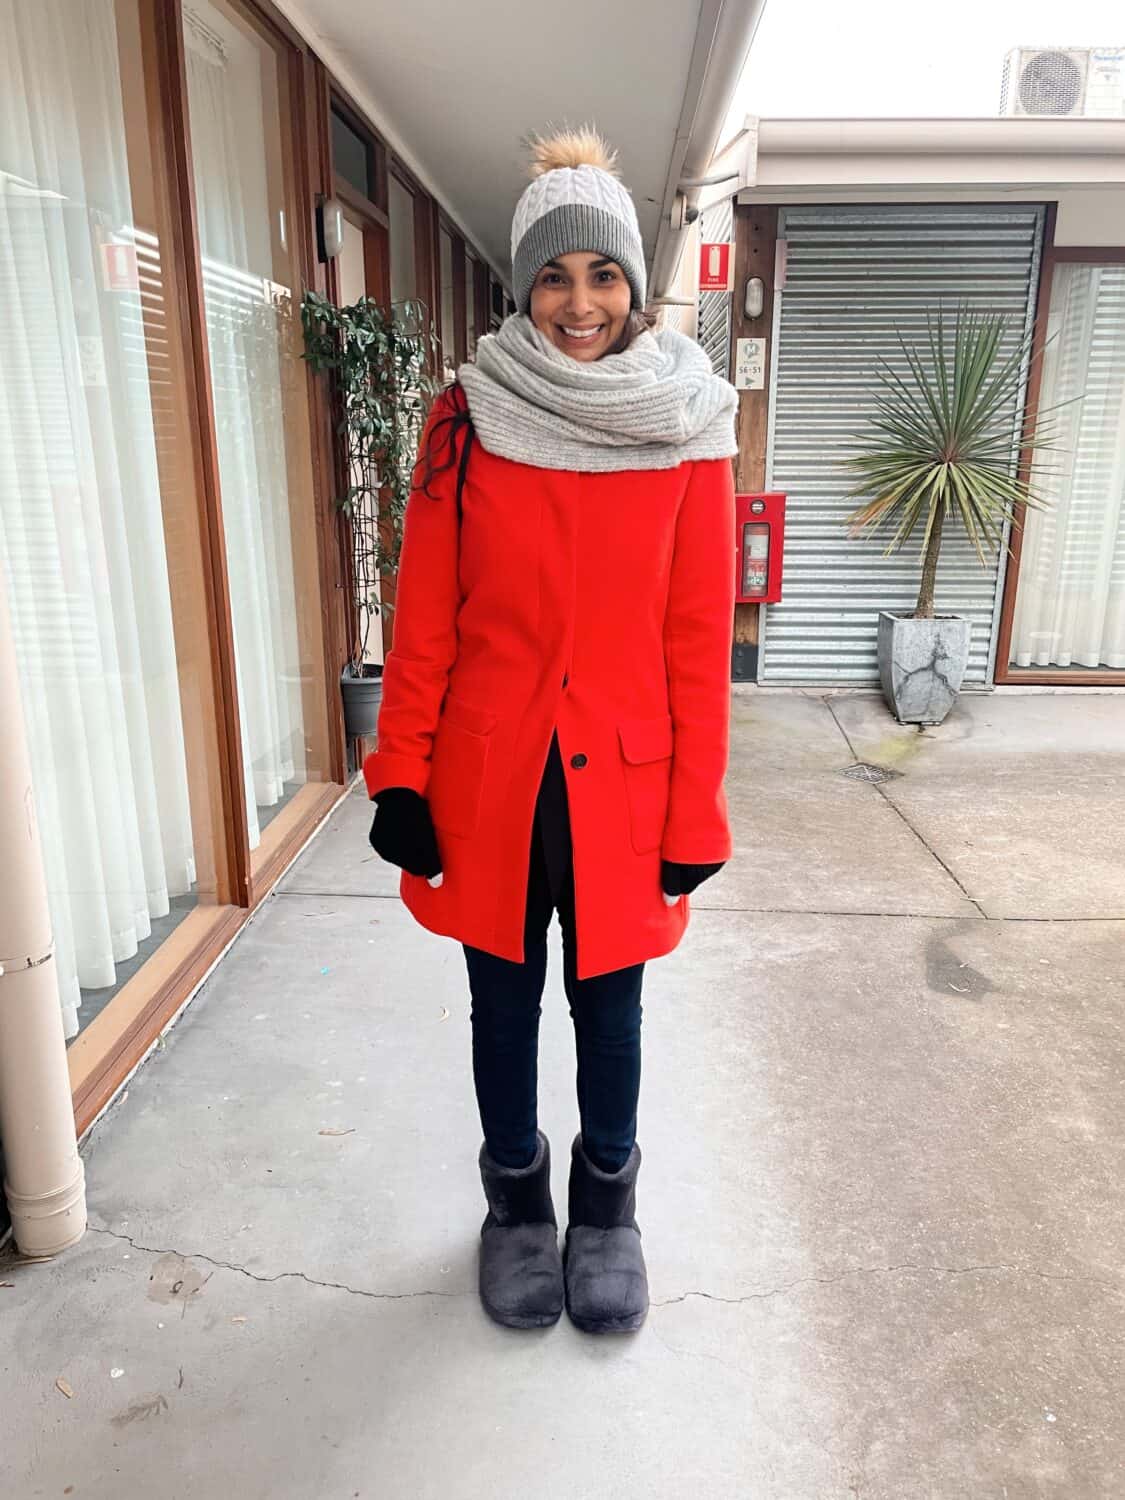 nisha in australia in winter gear